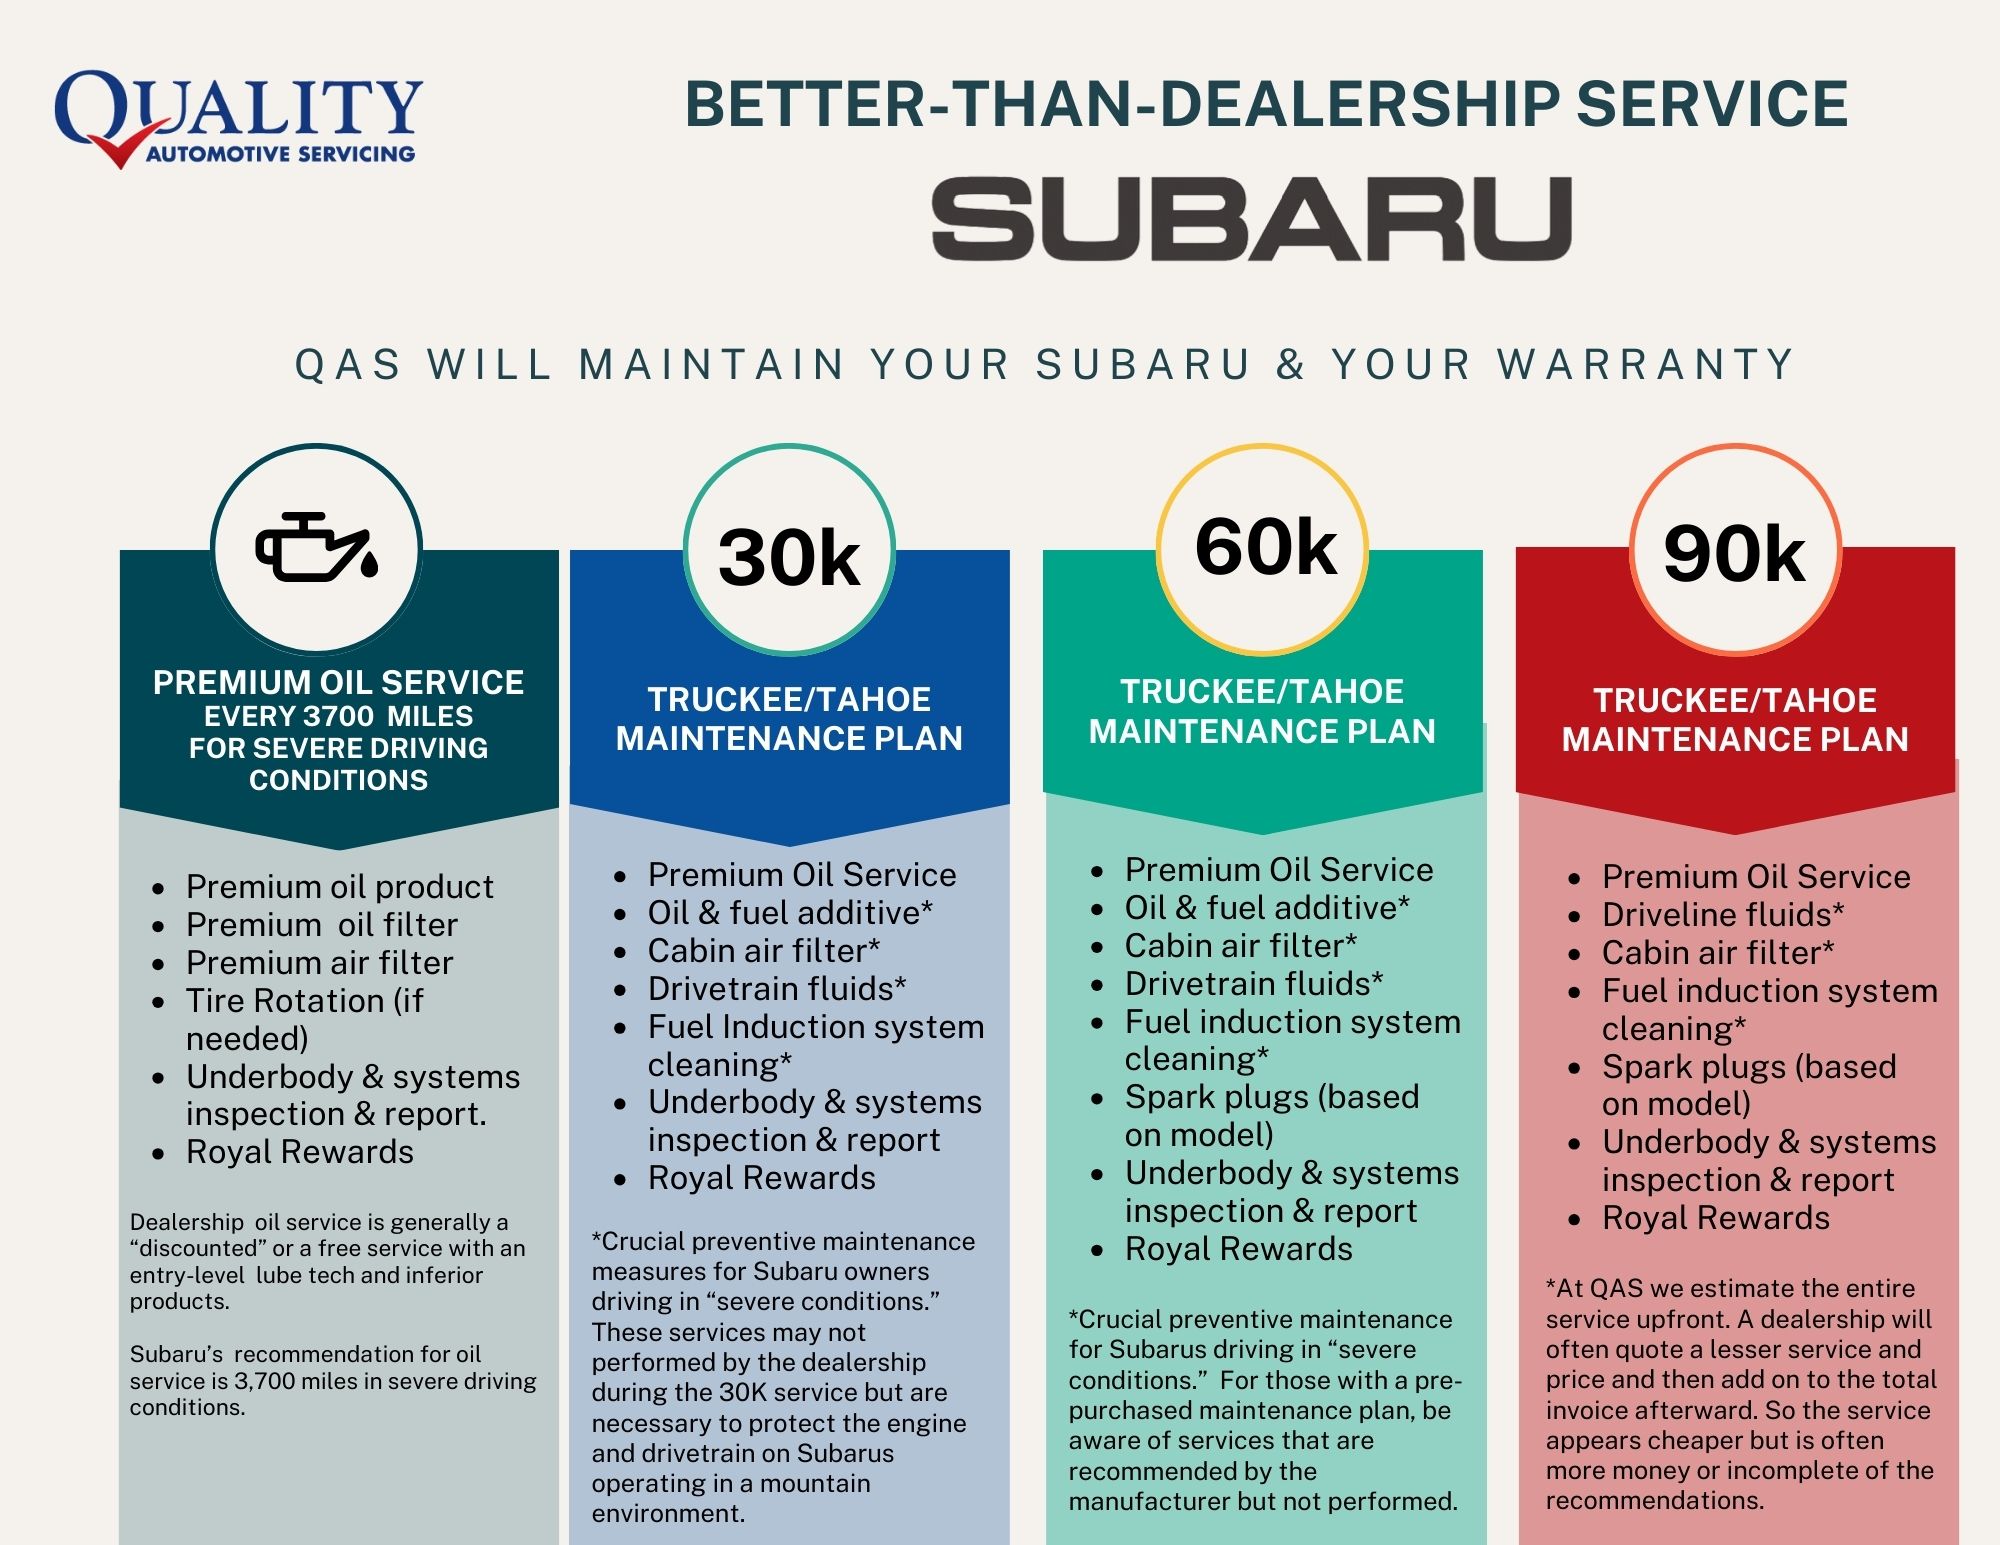 Better-Than-Dealership Service Subaru